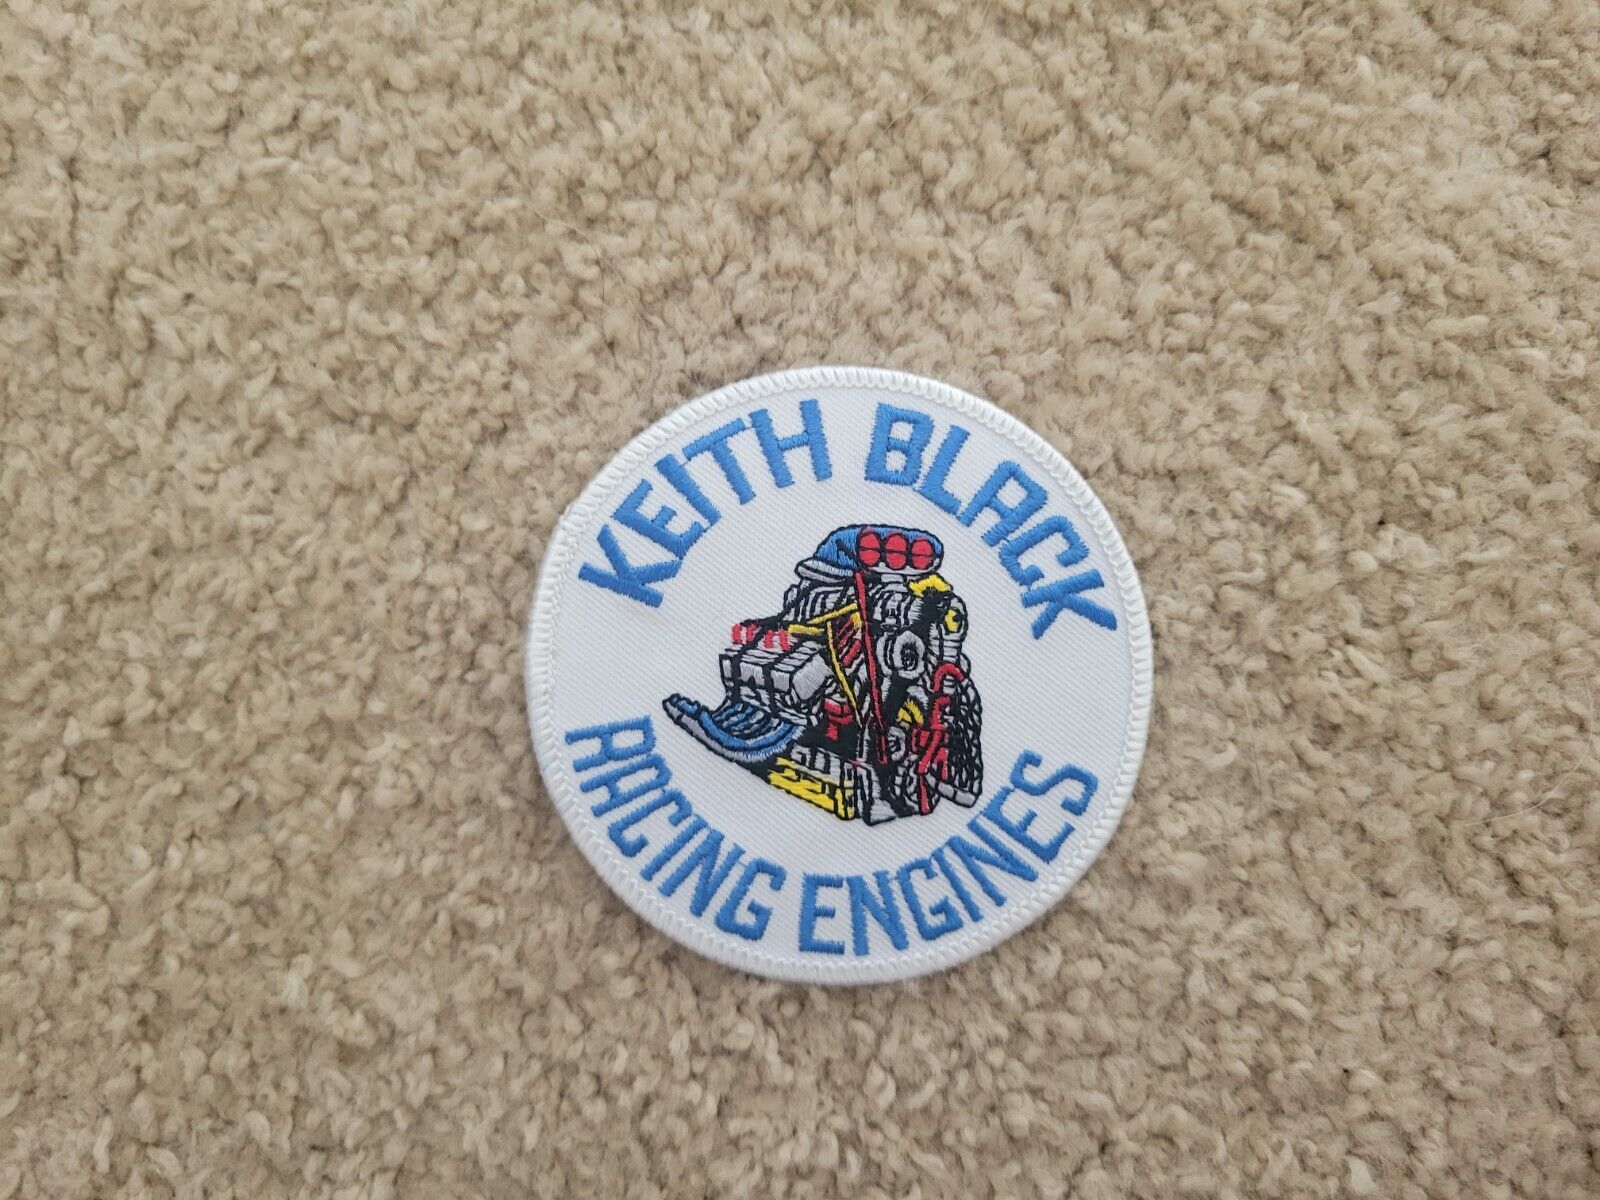 ORIGINAL Rare Discountinued Vintage Keith Black Racing PATCH 6 color patch 3.5\